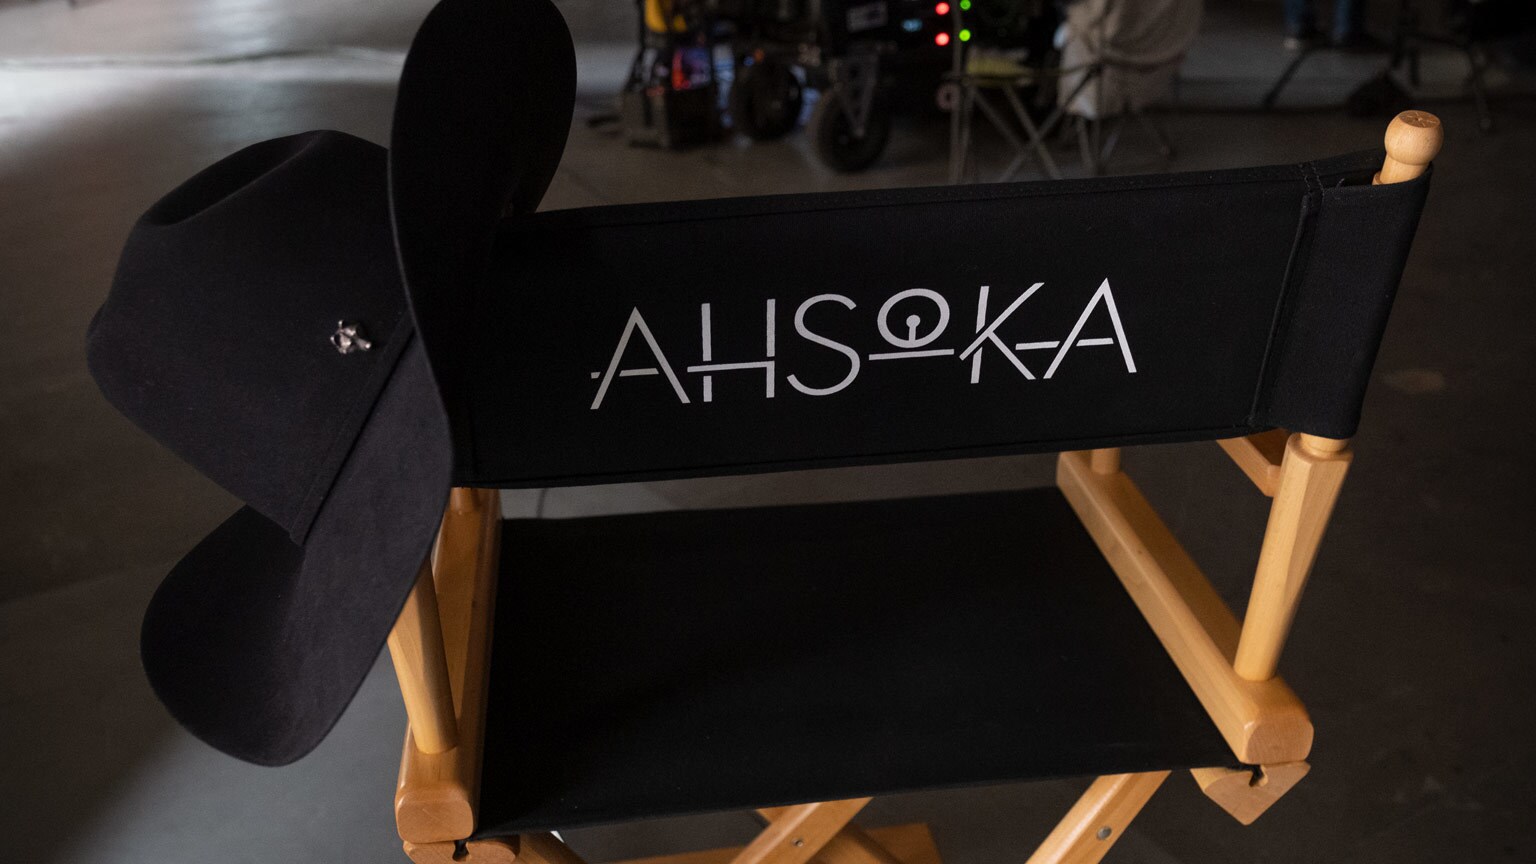 Ahsoka, the Upcoming Disney+ Original Series, Begins Production